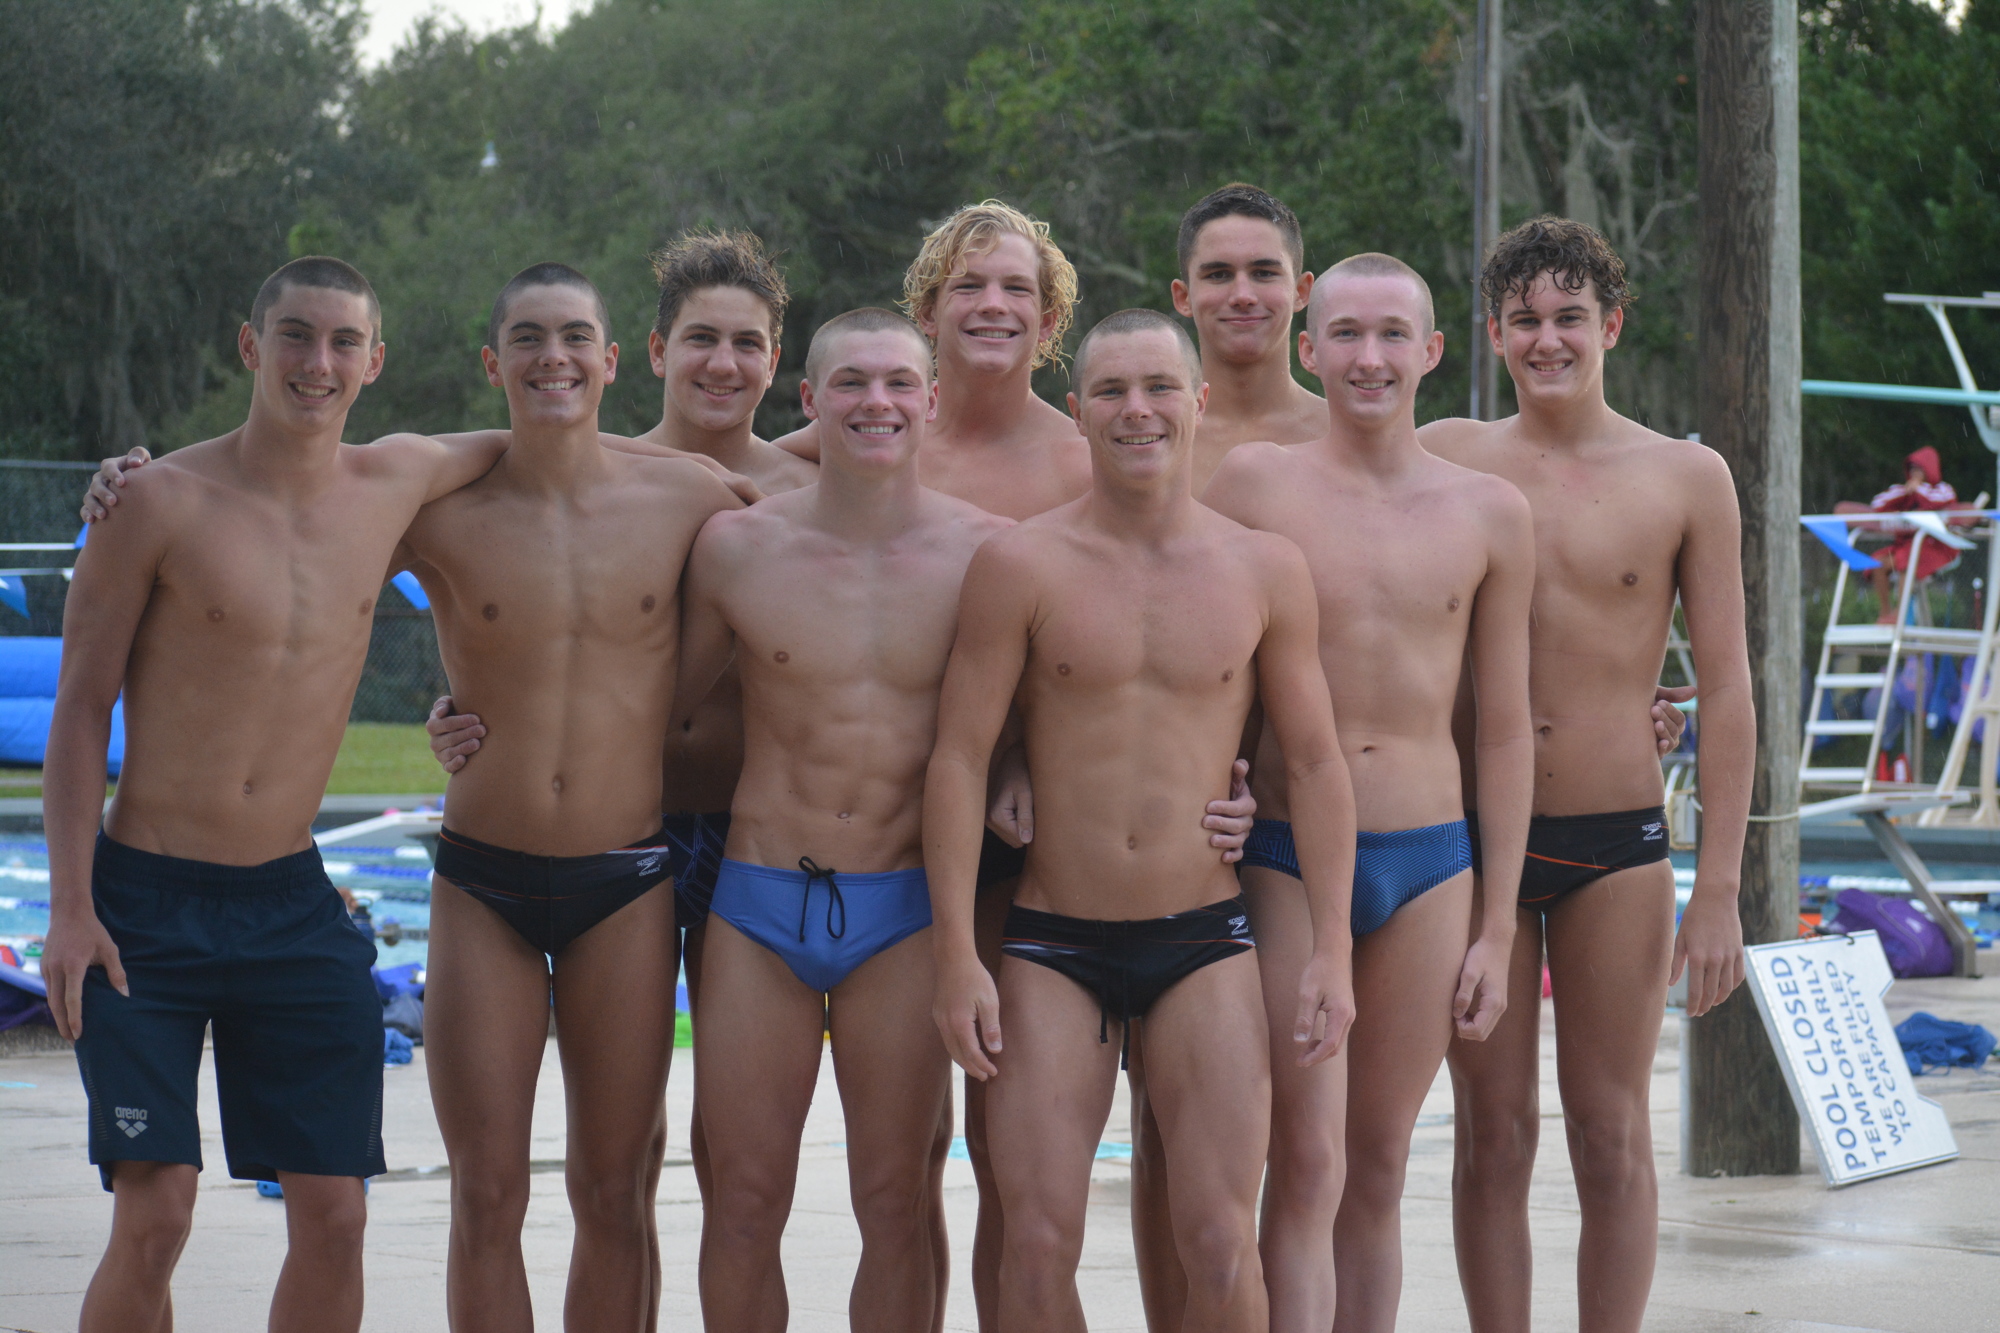 2. The Sarasota High boys swim team won a state title despite winning no individual events.